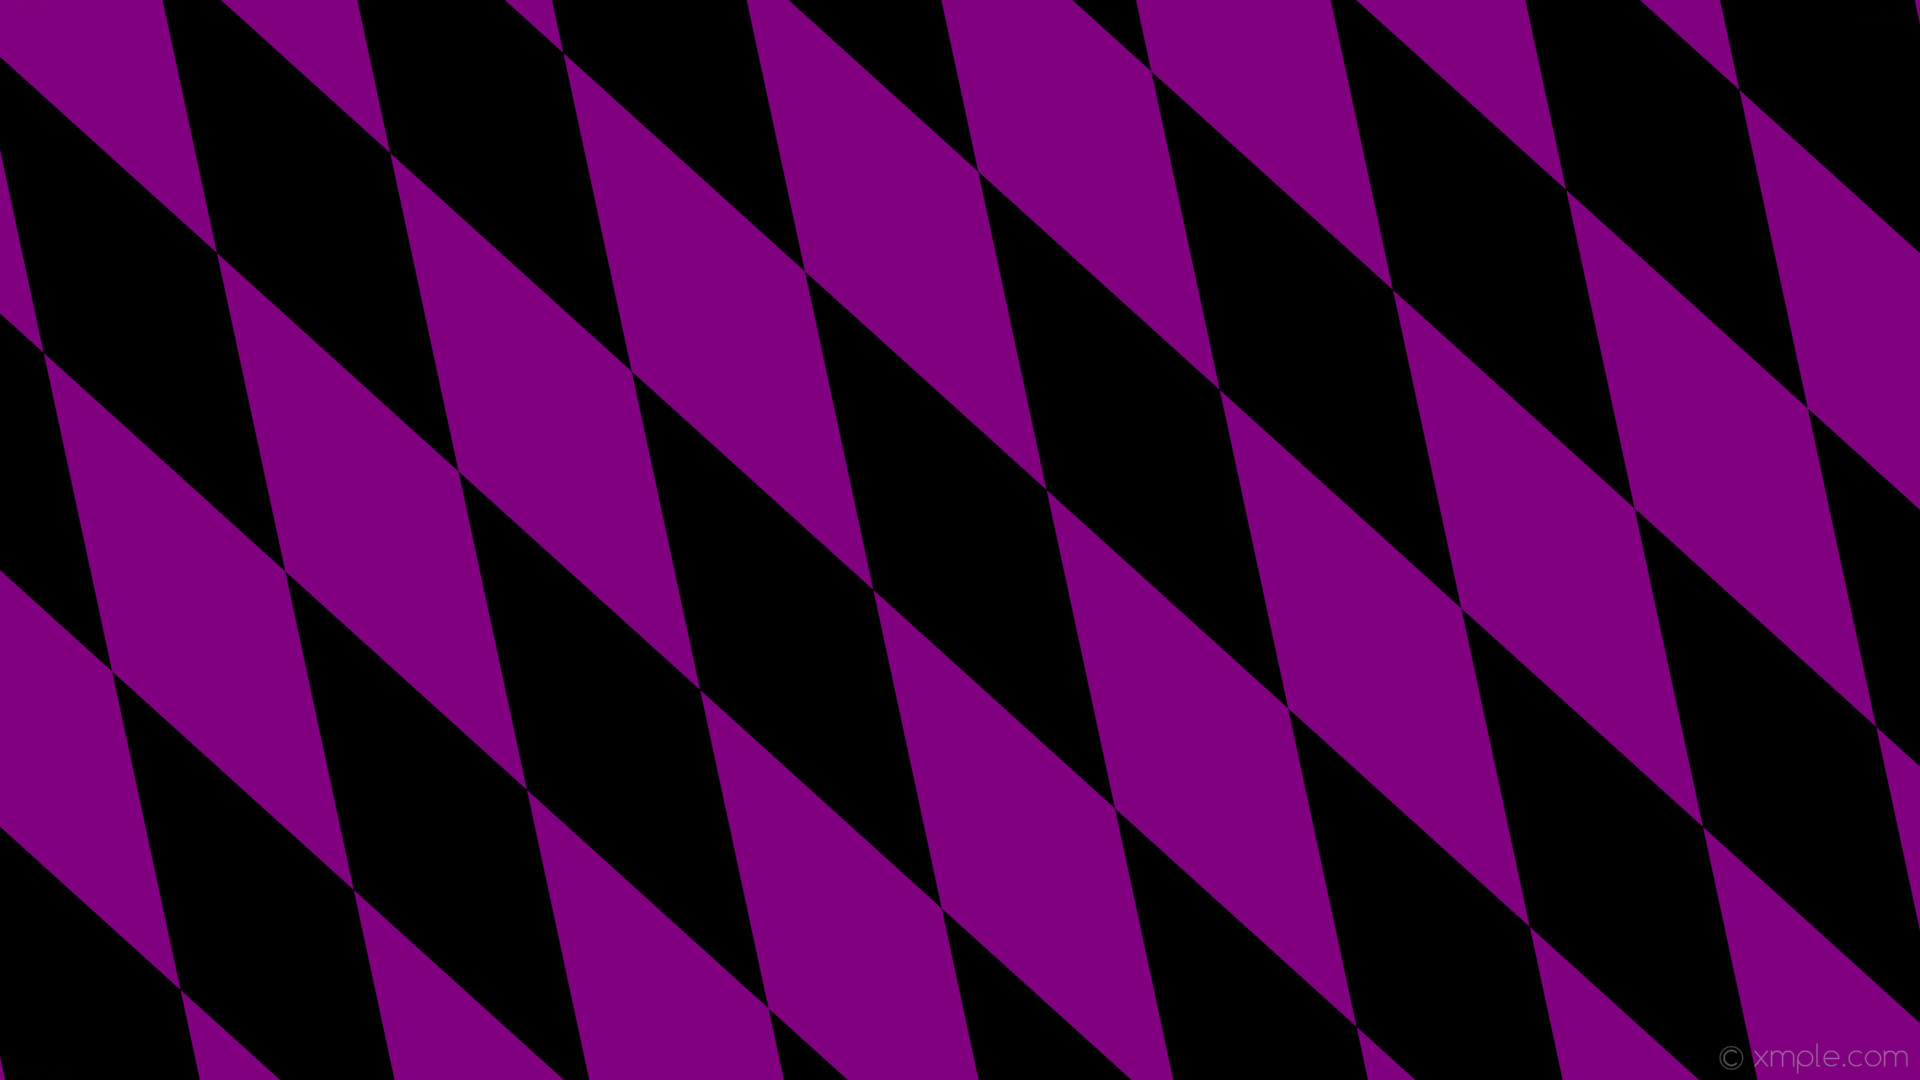 1920x1080 wallpaper rhombus black purple diamond lozenge #000000 #800080 120Â° 620px  200px